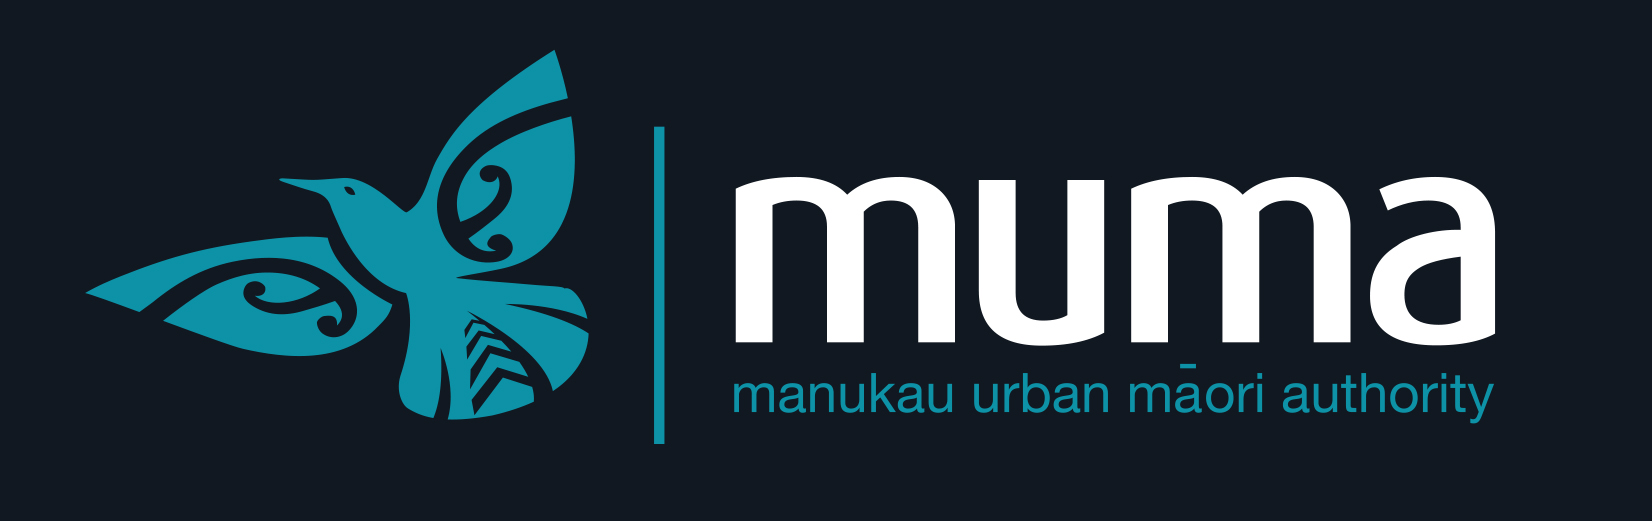 Manakau Urban Māori Authority Logo Link